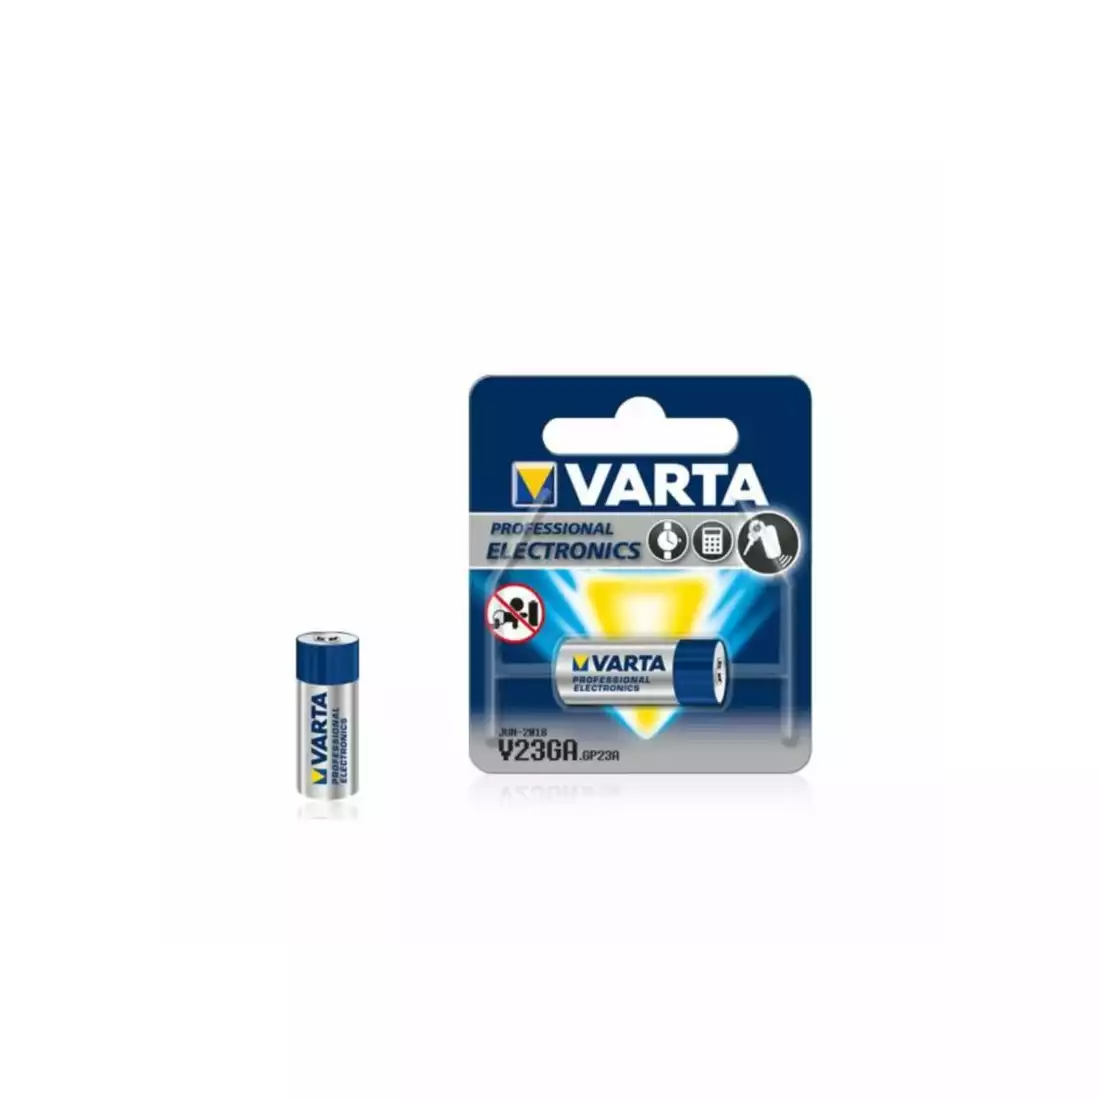 VARTA LR23A alkaline-manganese battery 1 pc.